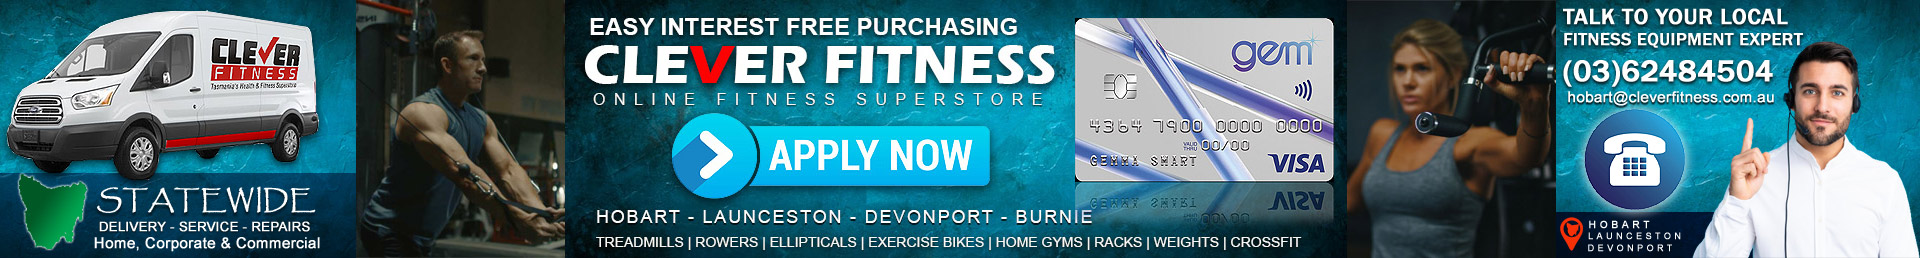 Gym Equipment Interest Free Hobart